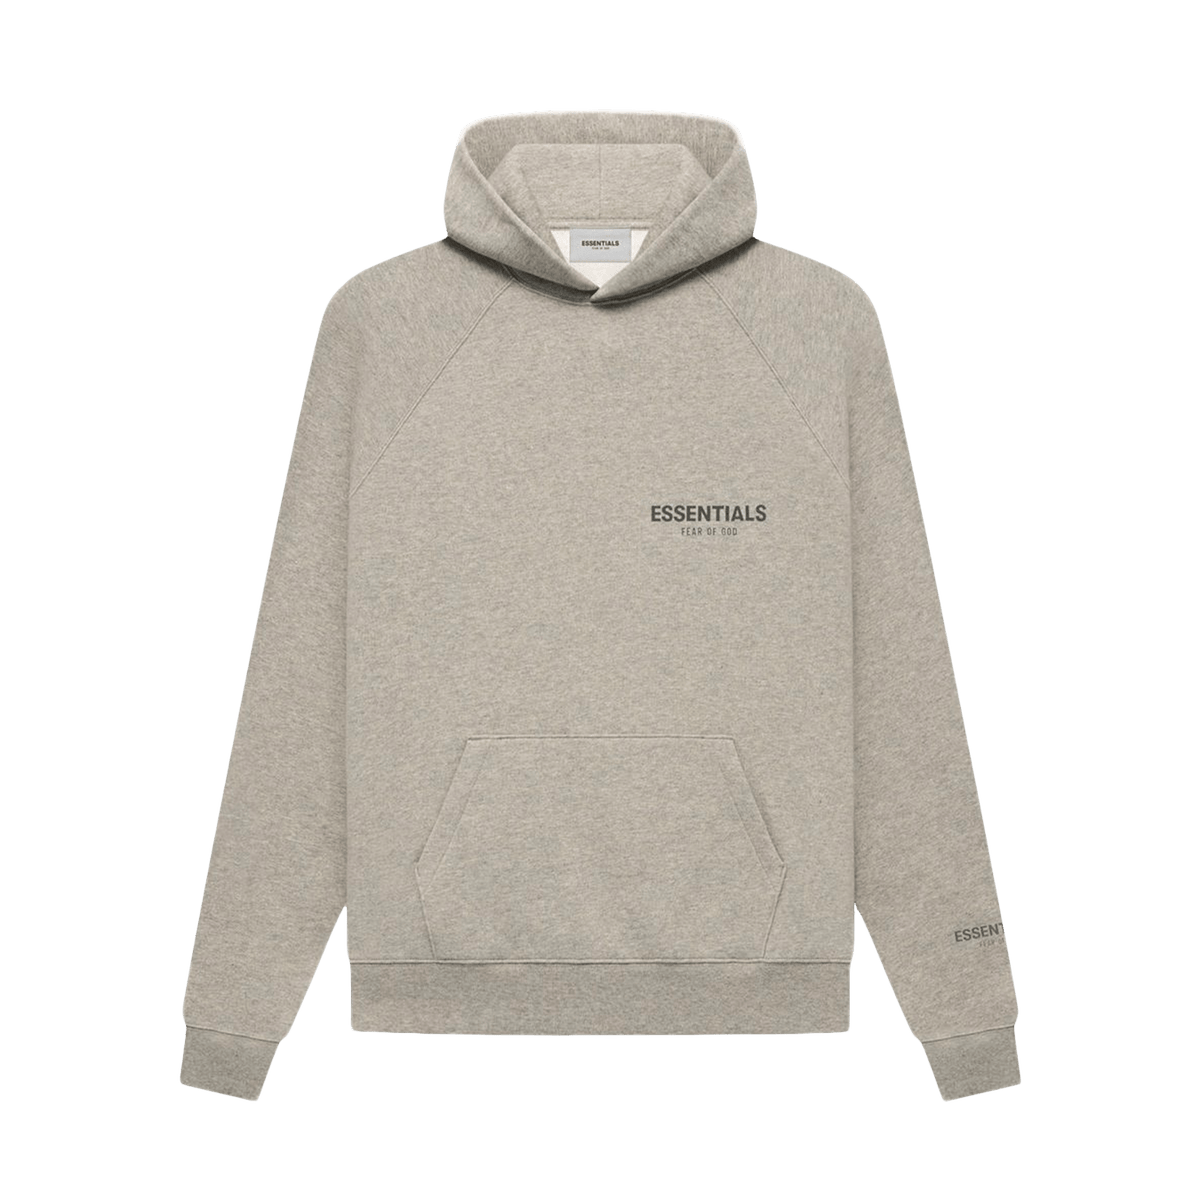 Dsquared2 slogan print sweatshirt Essentials Core Collection Pullover Hoodie 'Dark Heather Oatmeal' - JuzsportsShops